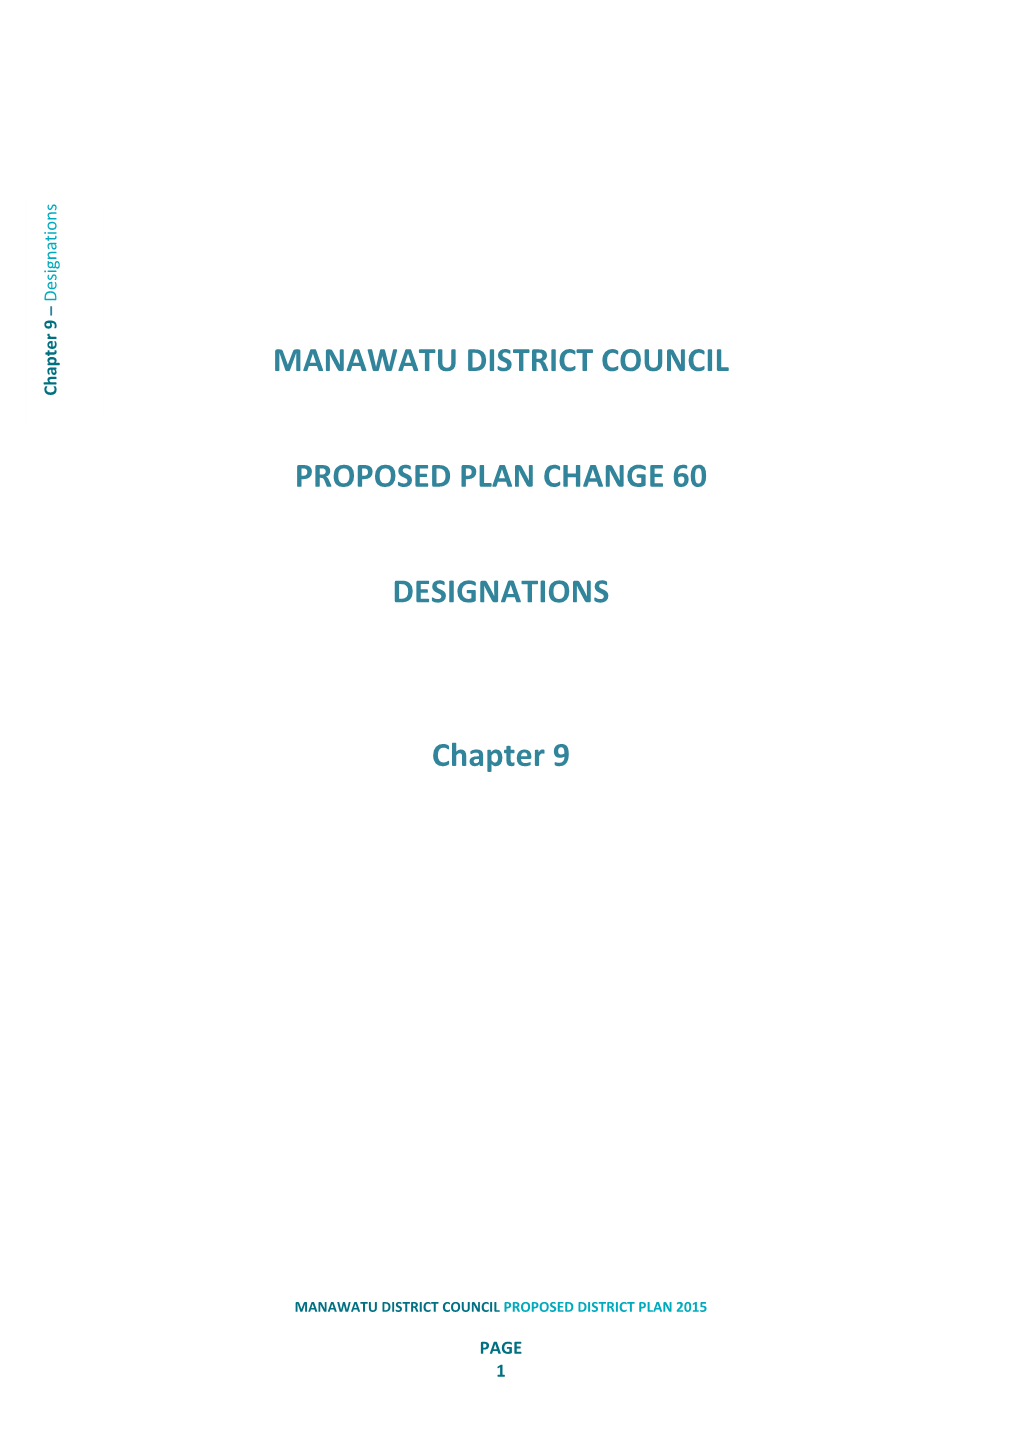 Manawatu District Council Proposed Plan